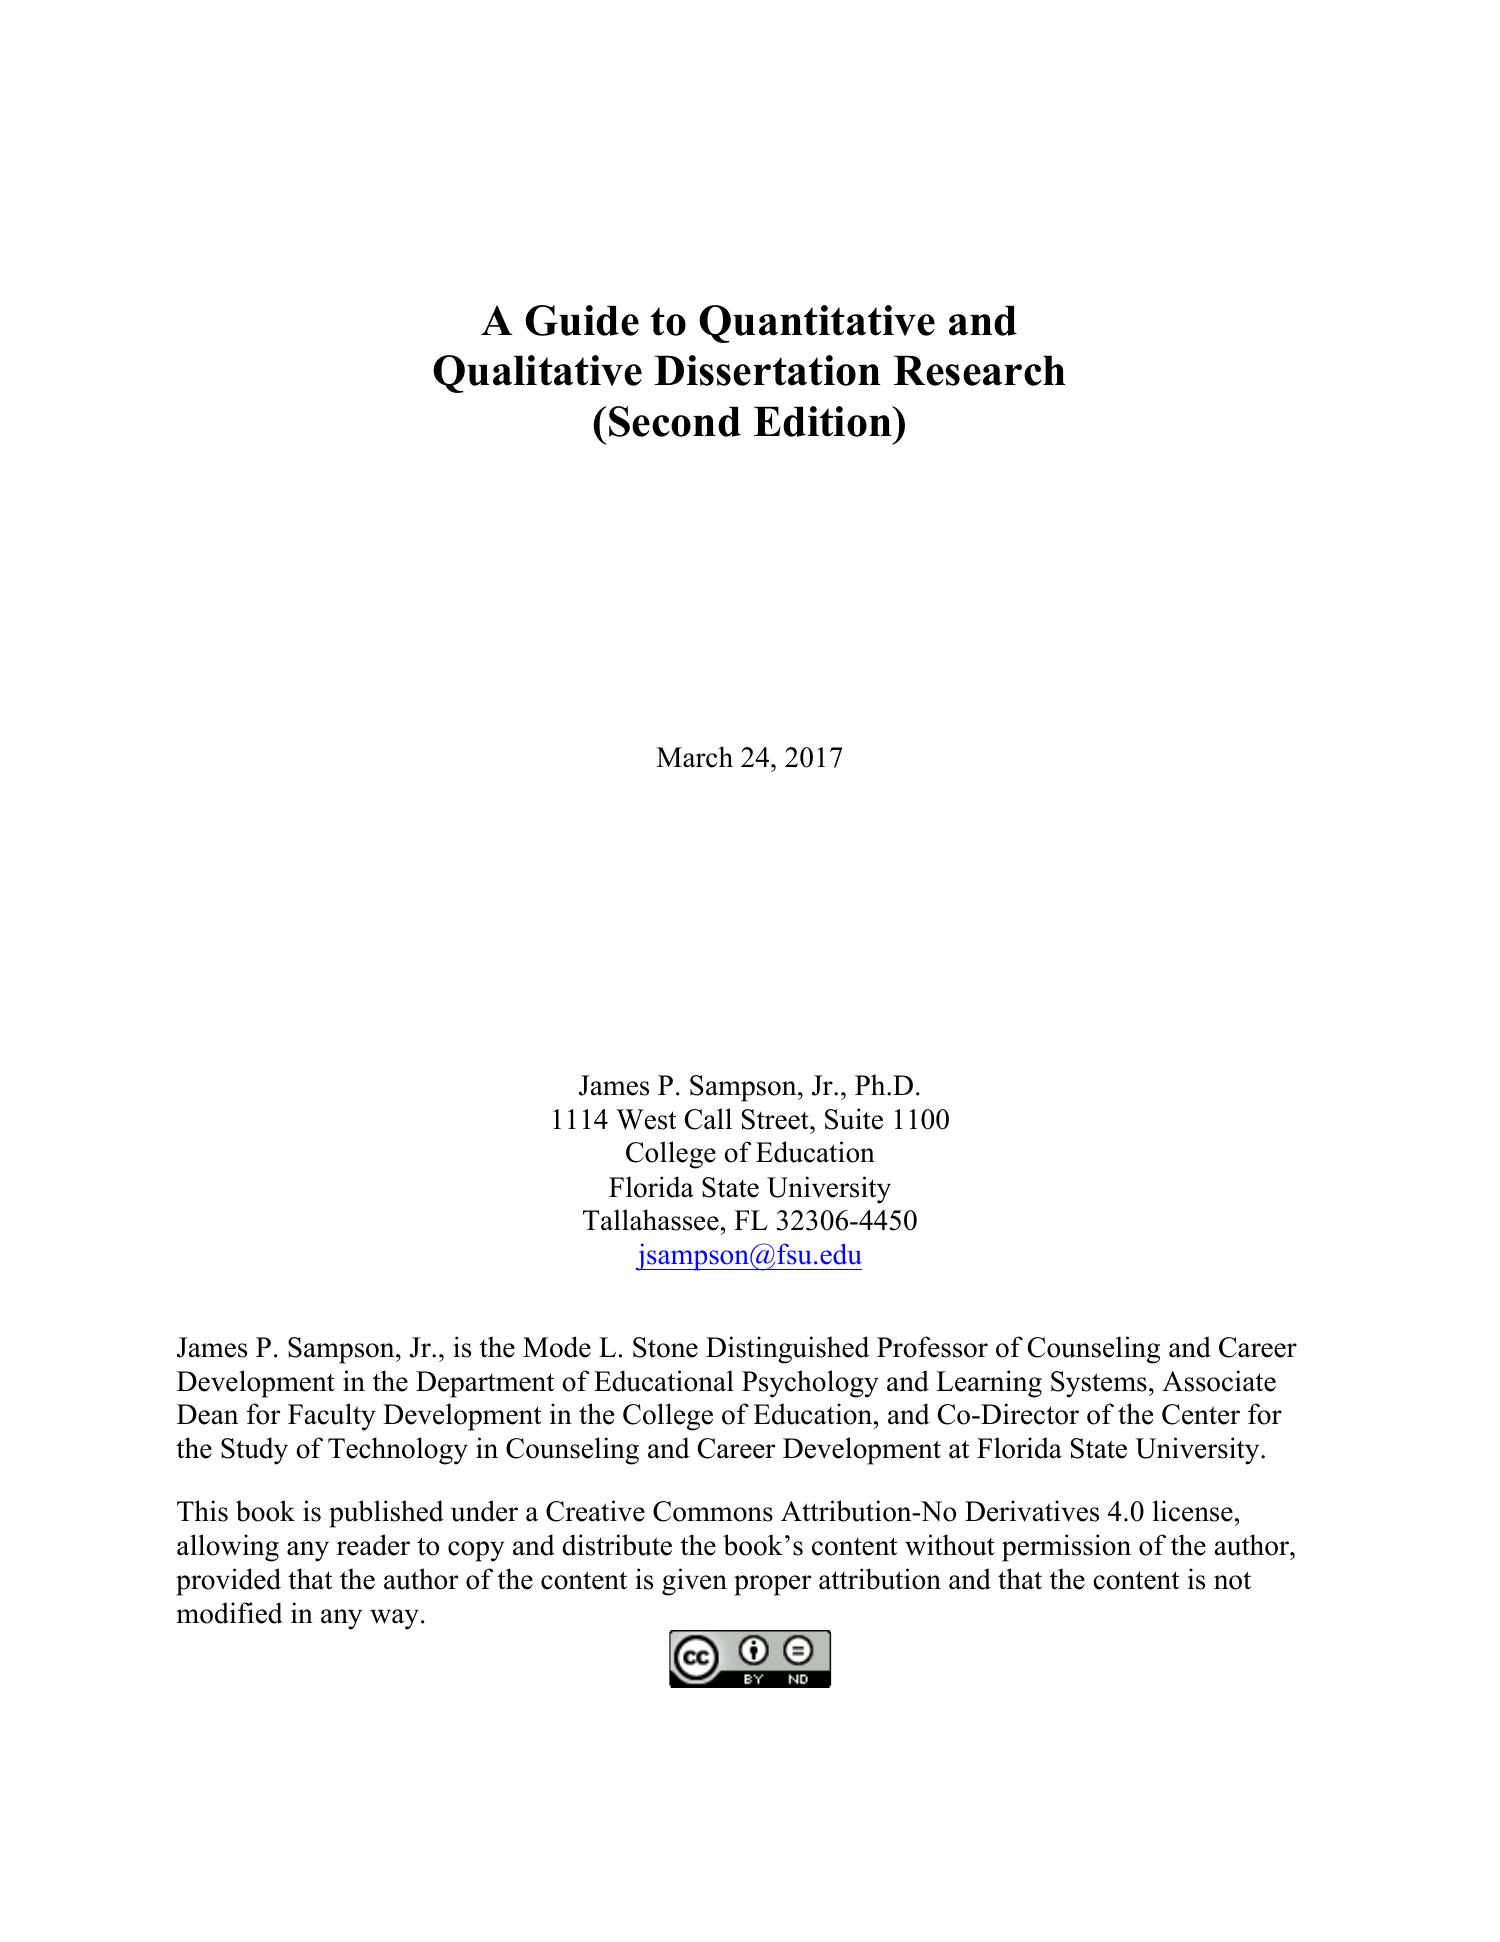 results chapter qualitative dissertation